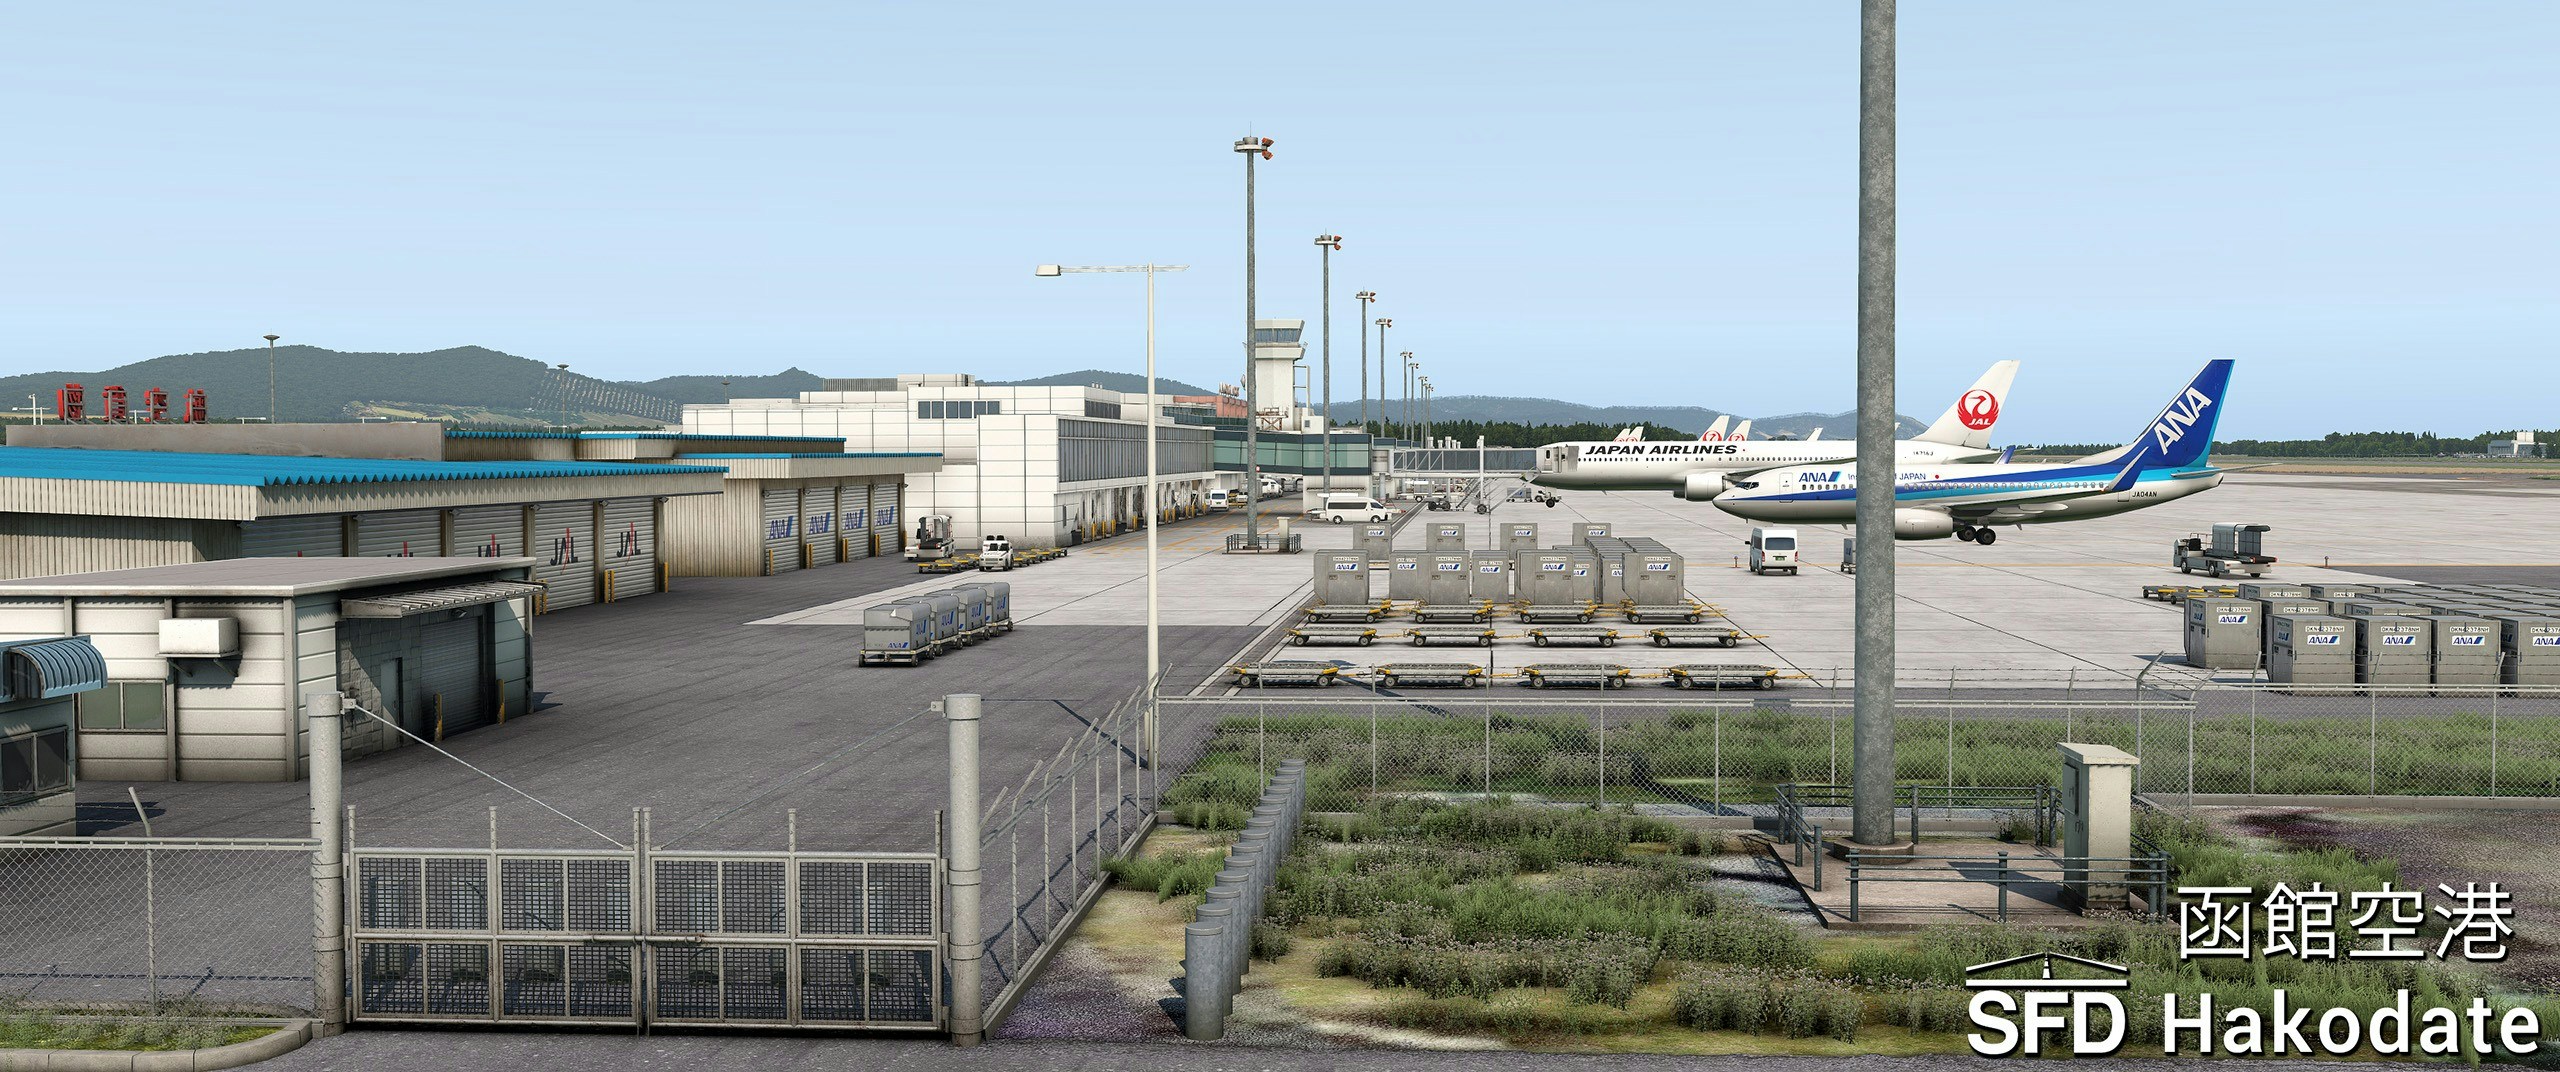 Dreamflight Studios Releases McClellan-Palomar Airport for MSFS